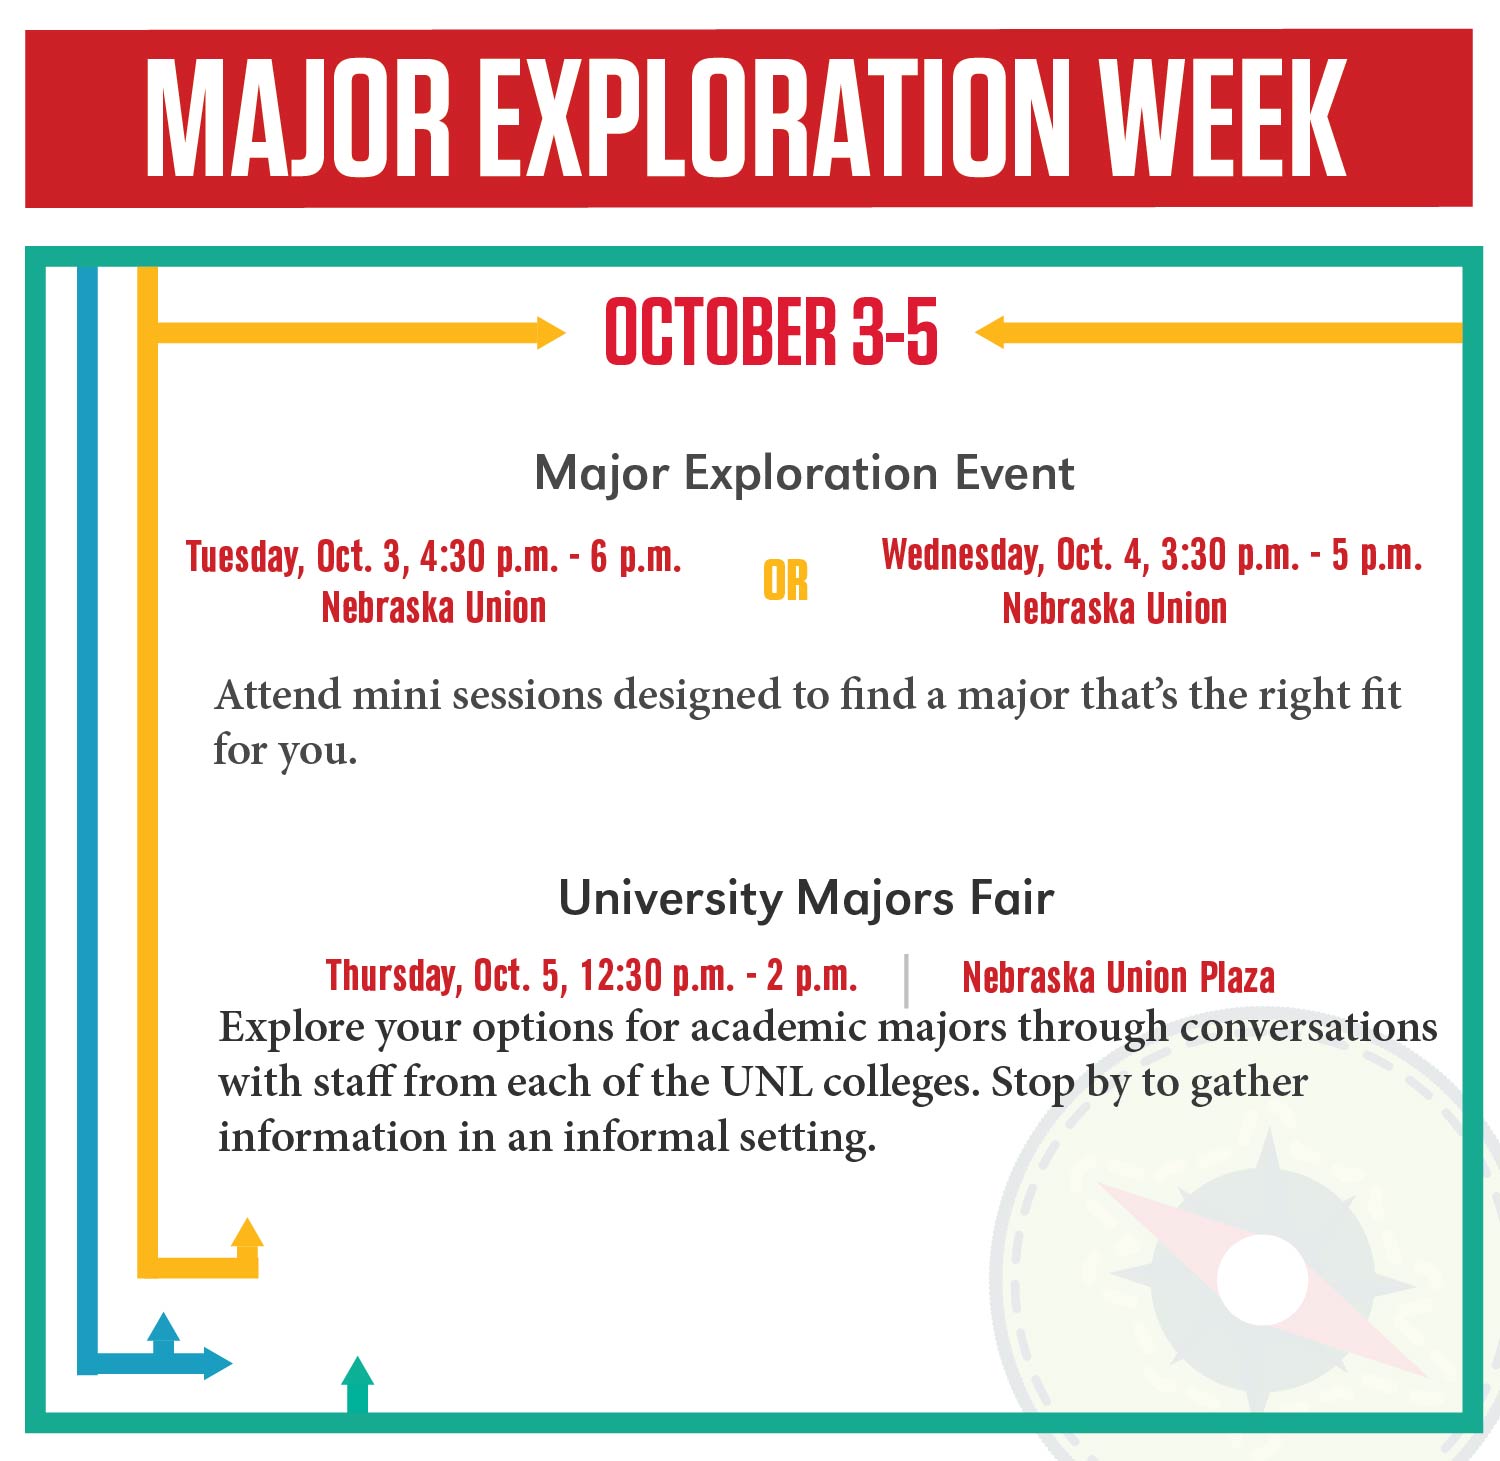 Major Exploration Week